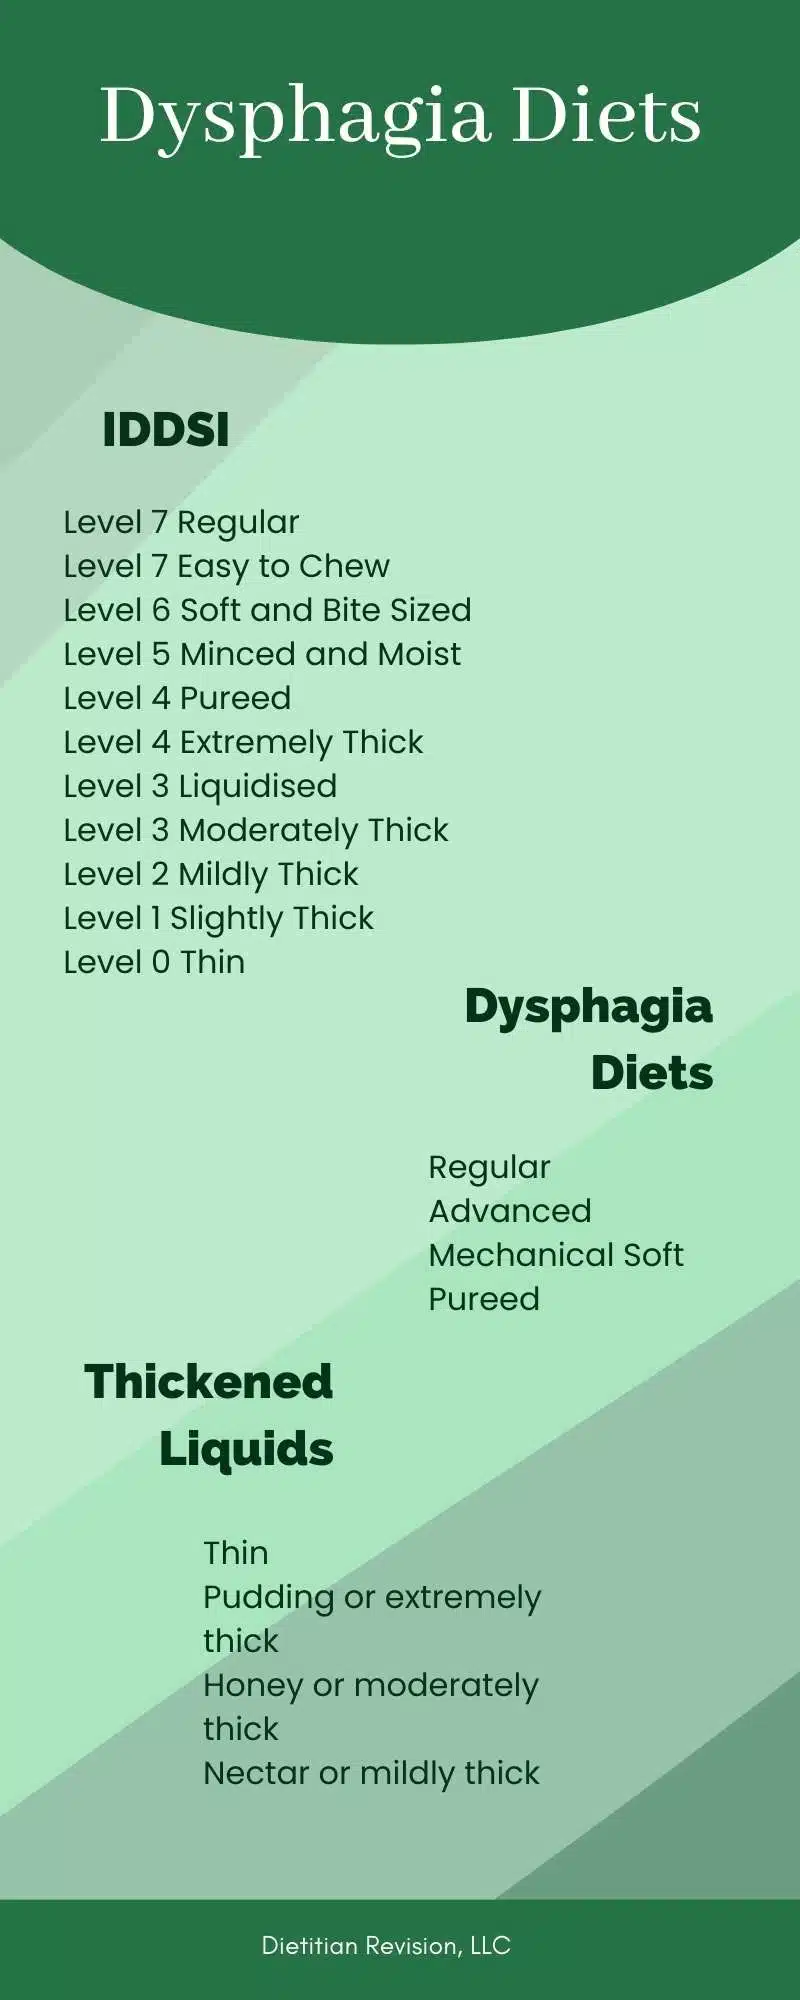 Dysphagia Diets: IDDSI levels, Regular, advanced mechanical soft, pureed, thickened liquids. 